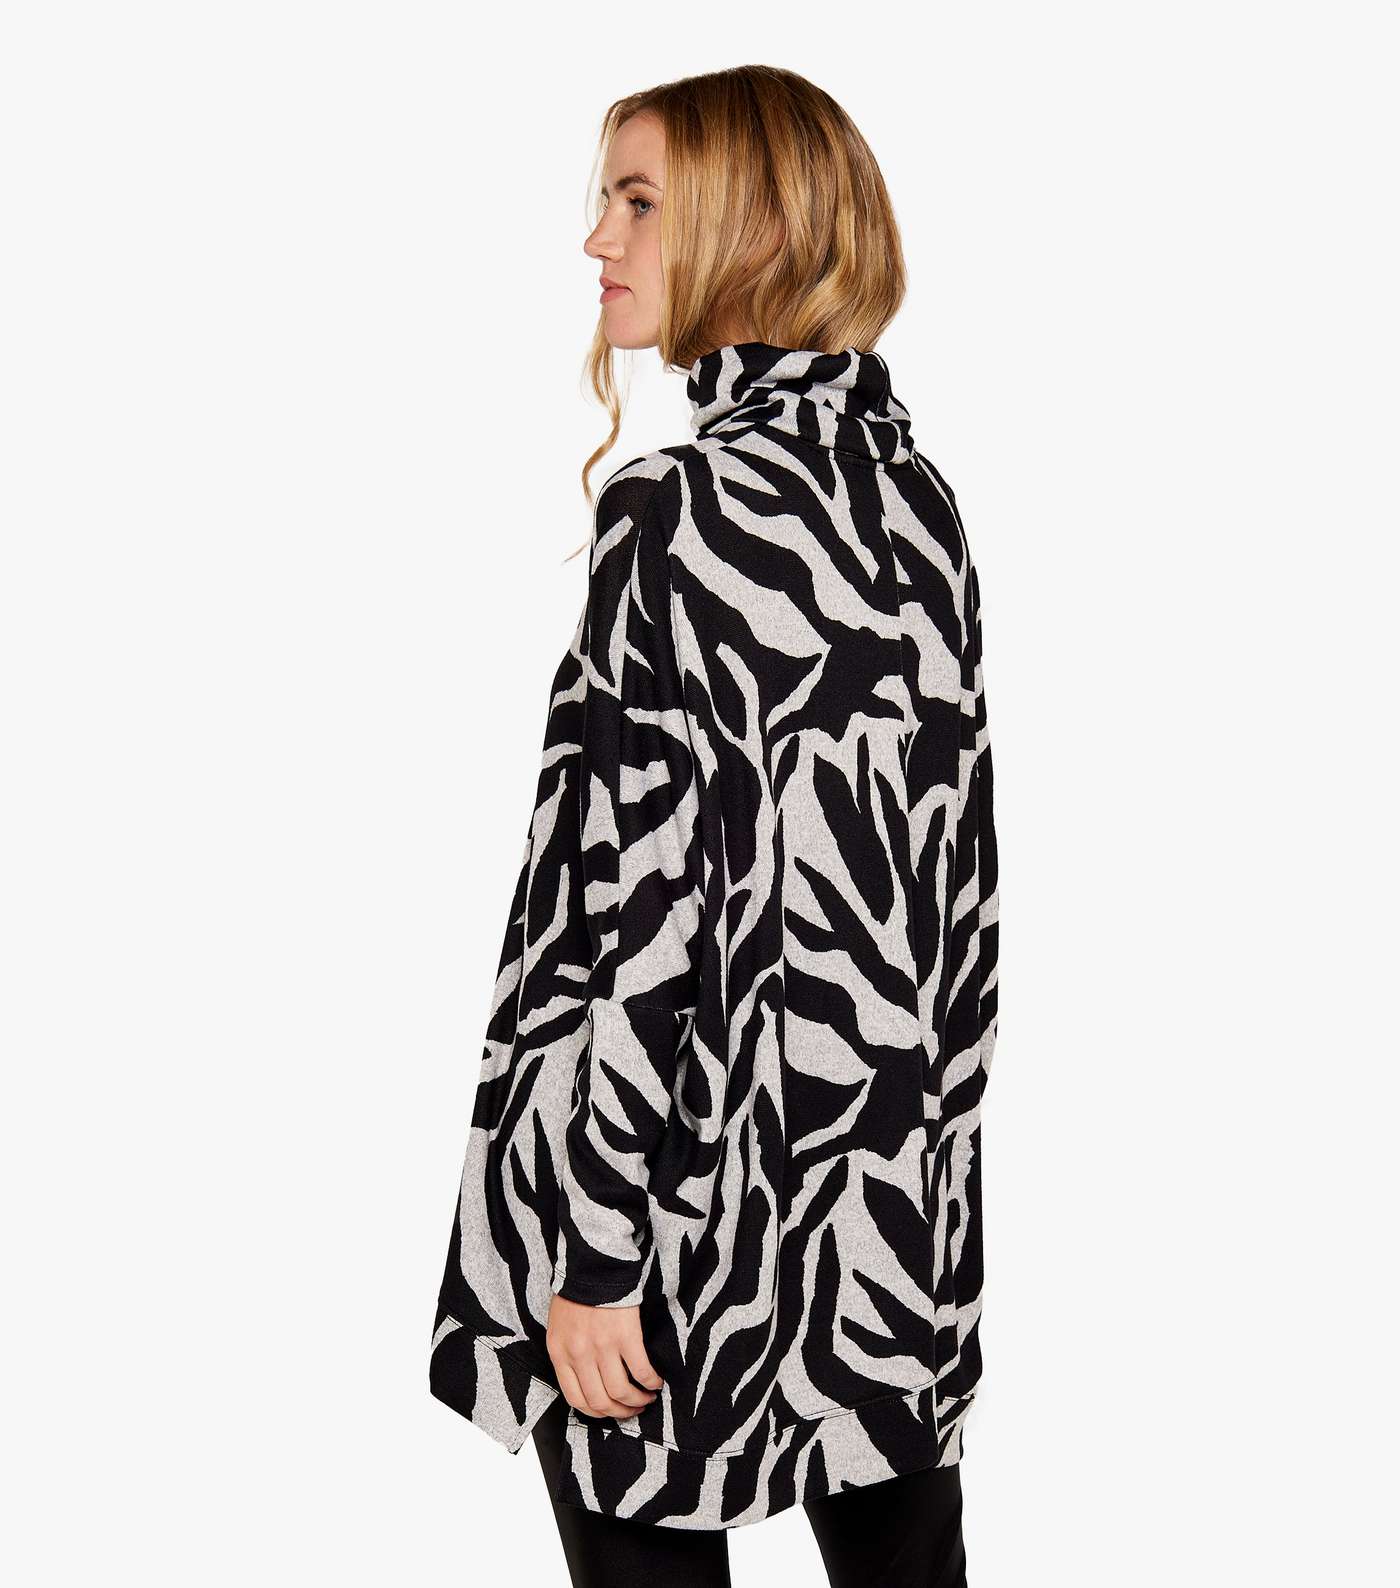 Apricot Light Grey Zebra Knit Roll Neck Long Sleeve Oversized Tunic Top Image 3